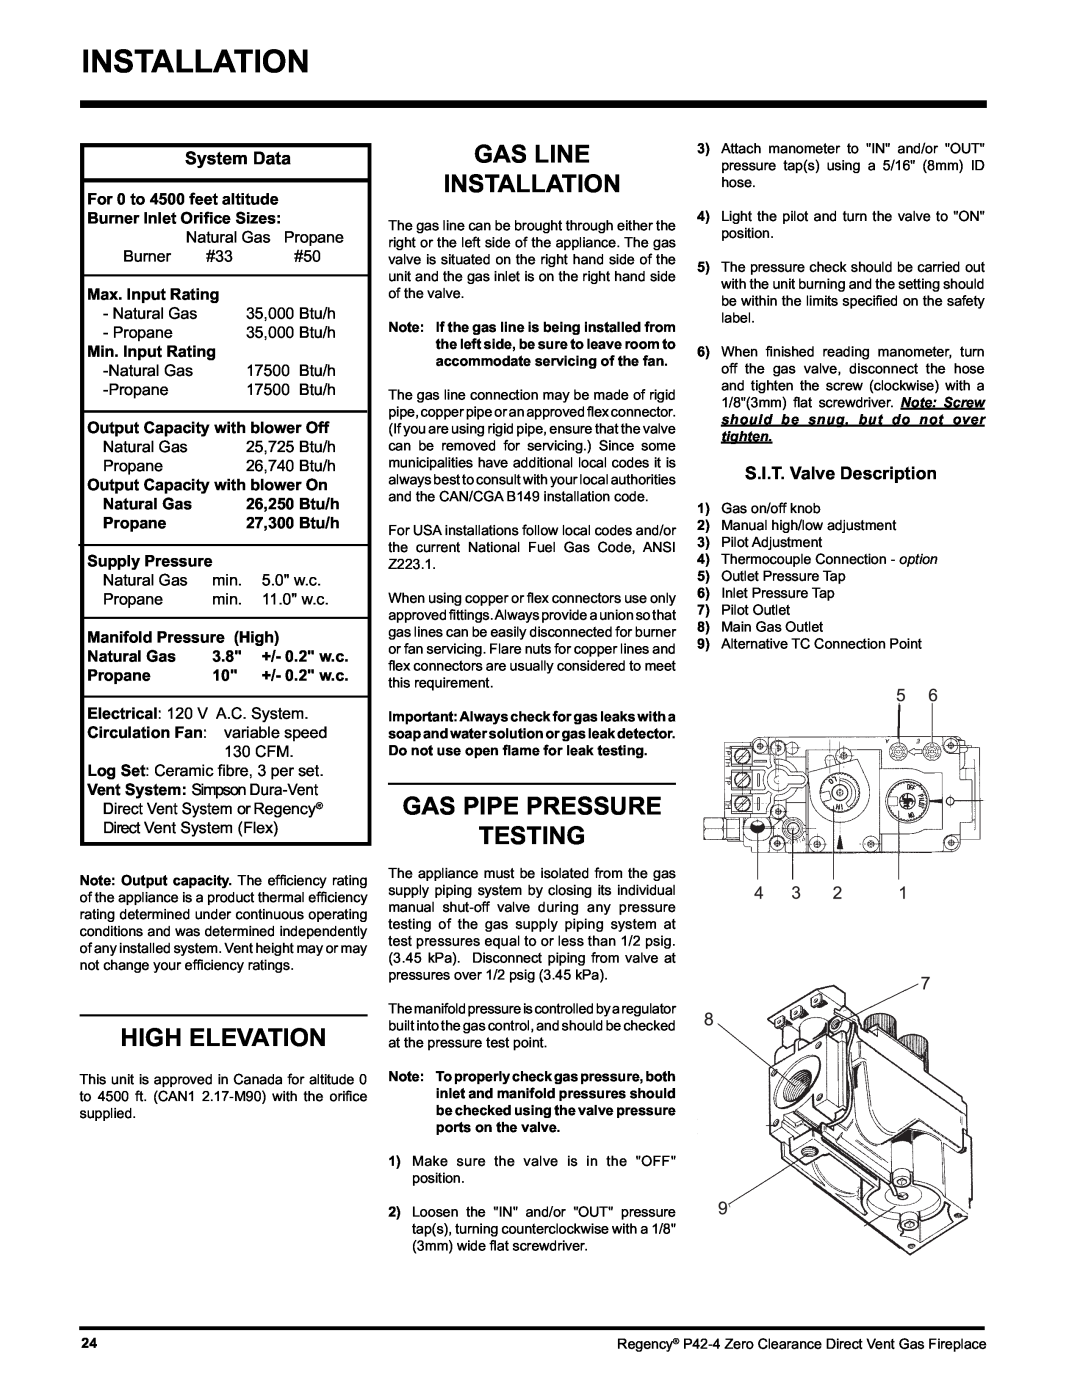 Regency P42-NG4 High Elevation, Gas Line Installation, Gas Pipe Pressure Testing, System Data, S.I.T. Valve Description 